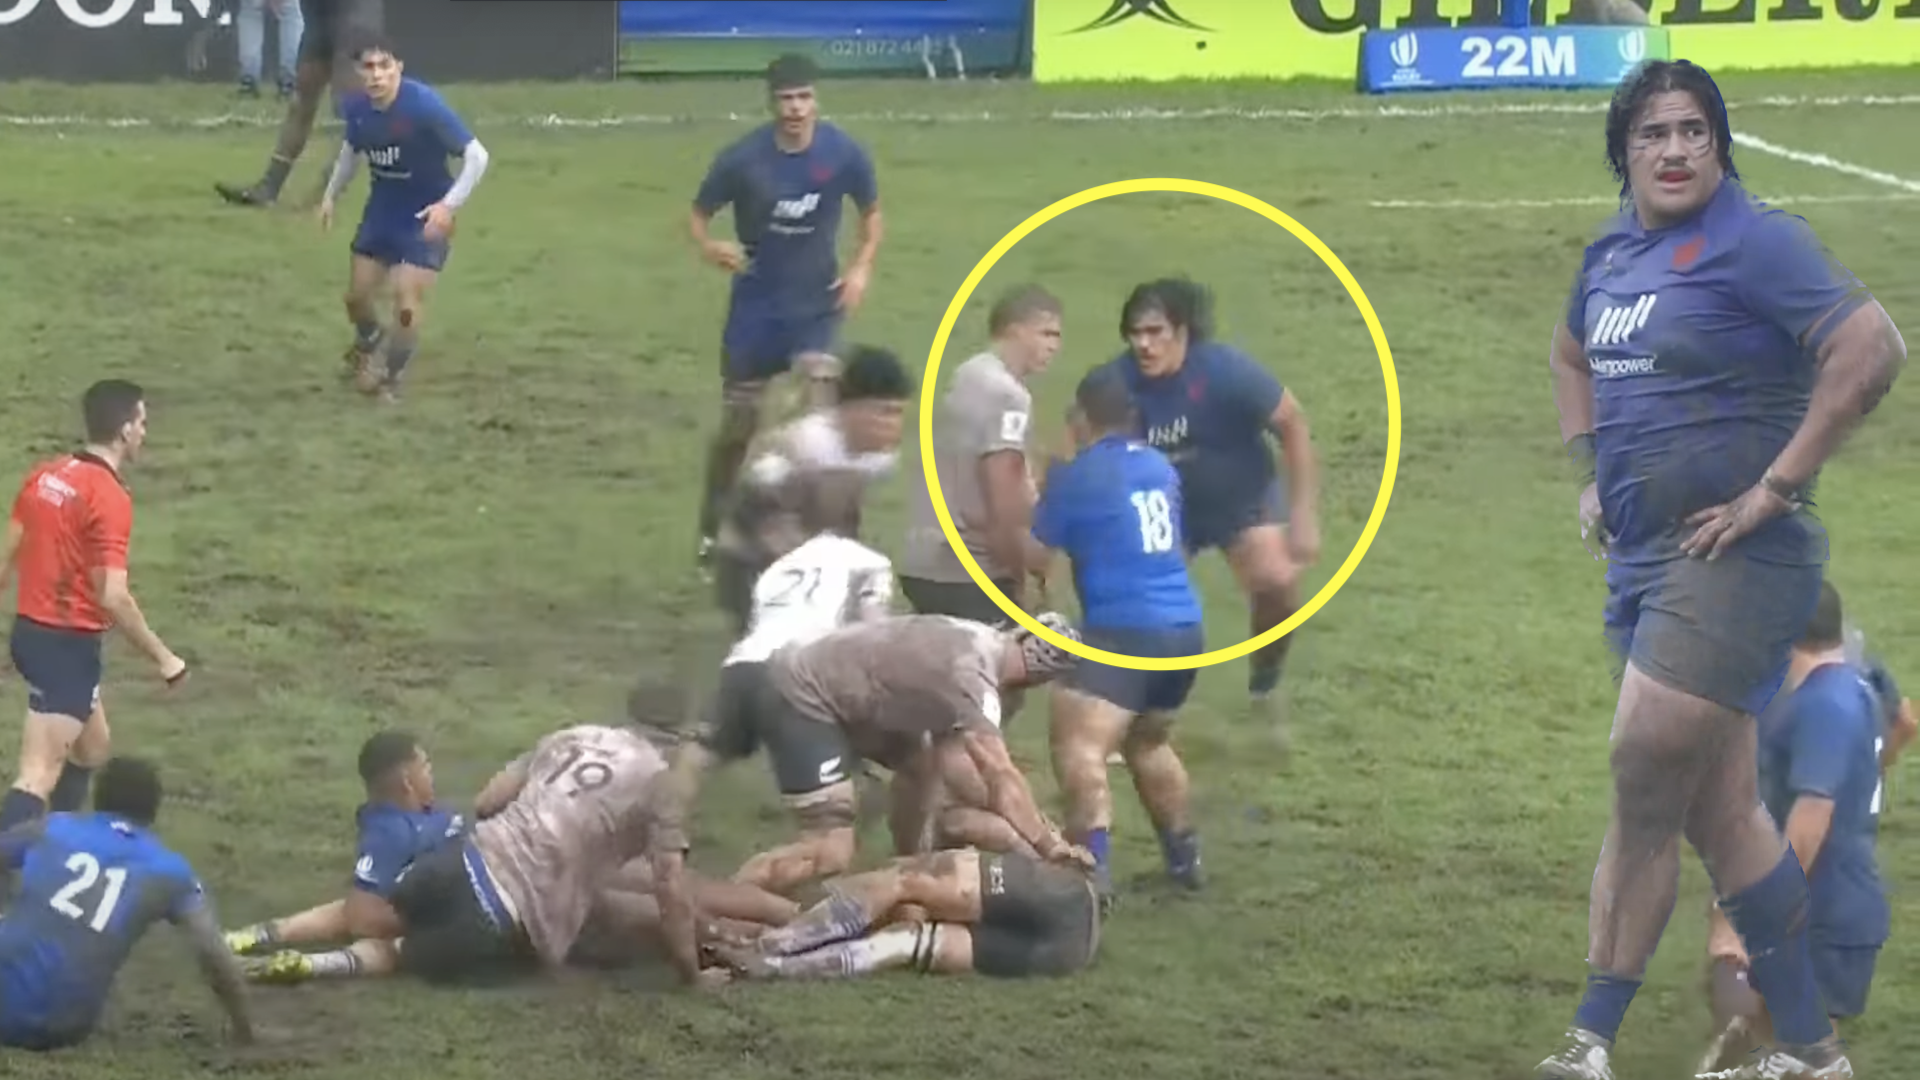 Brutal mismatch leaves Tuilagi crushing New Zealand player 50kg lighter than him